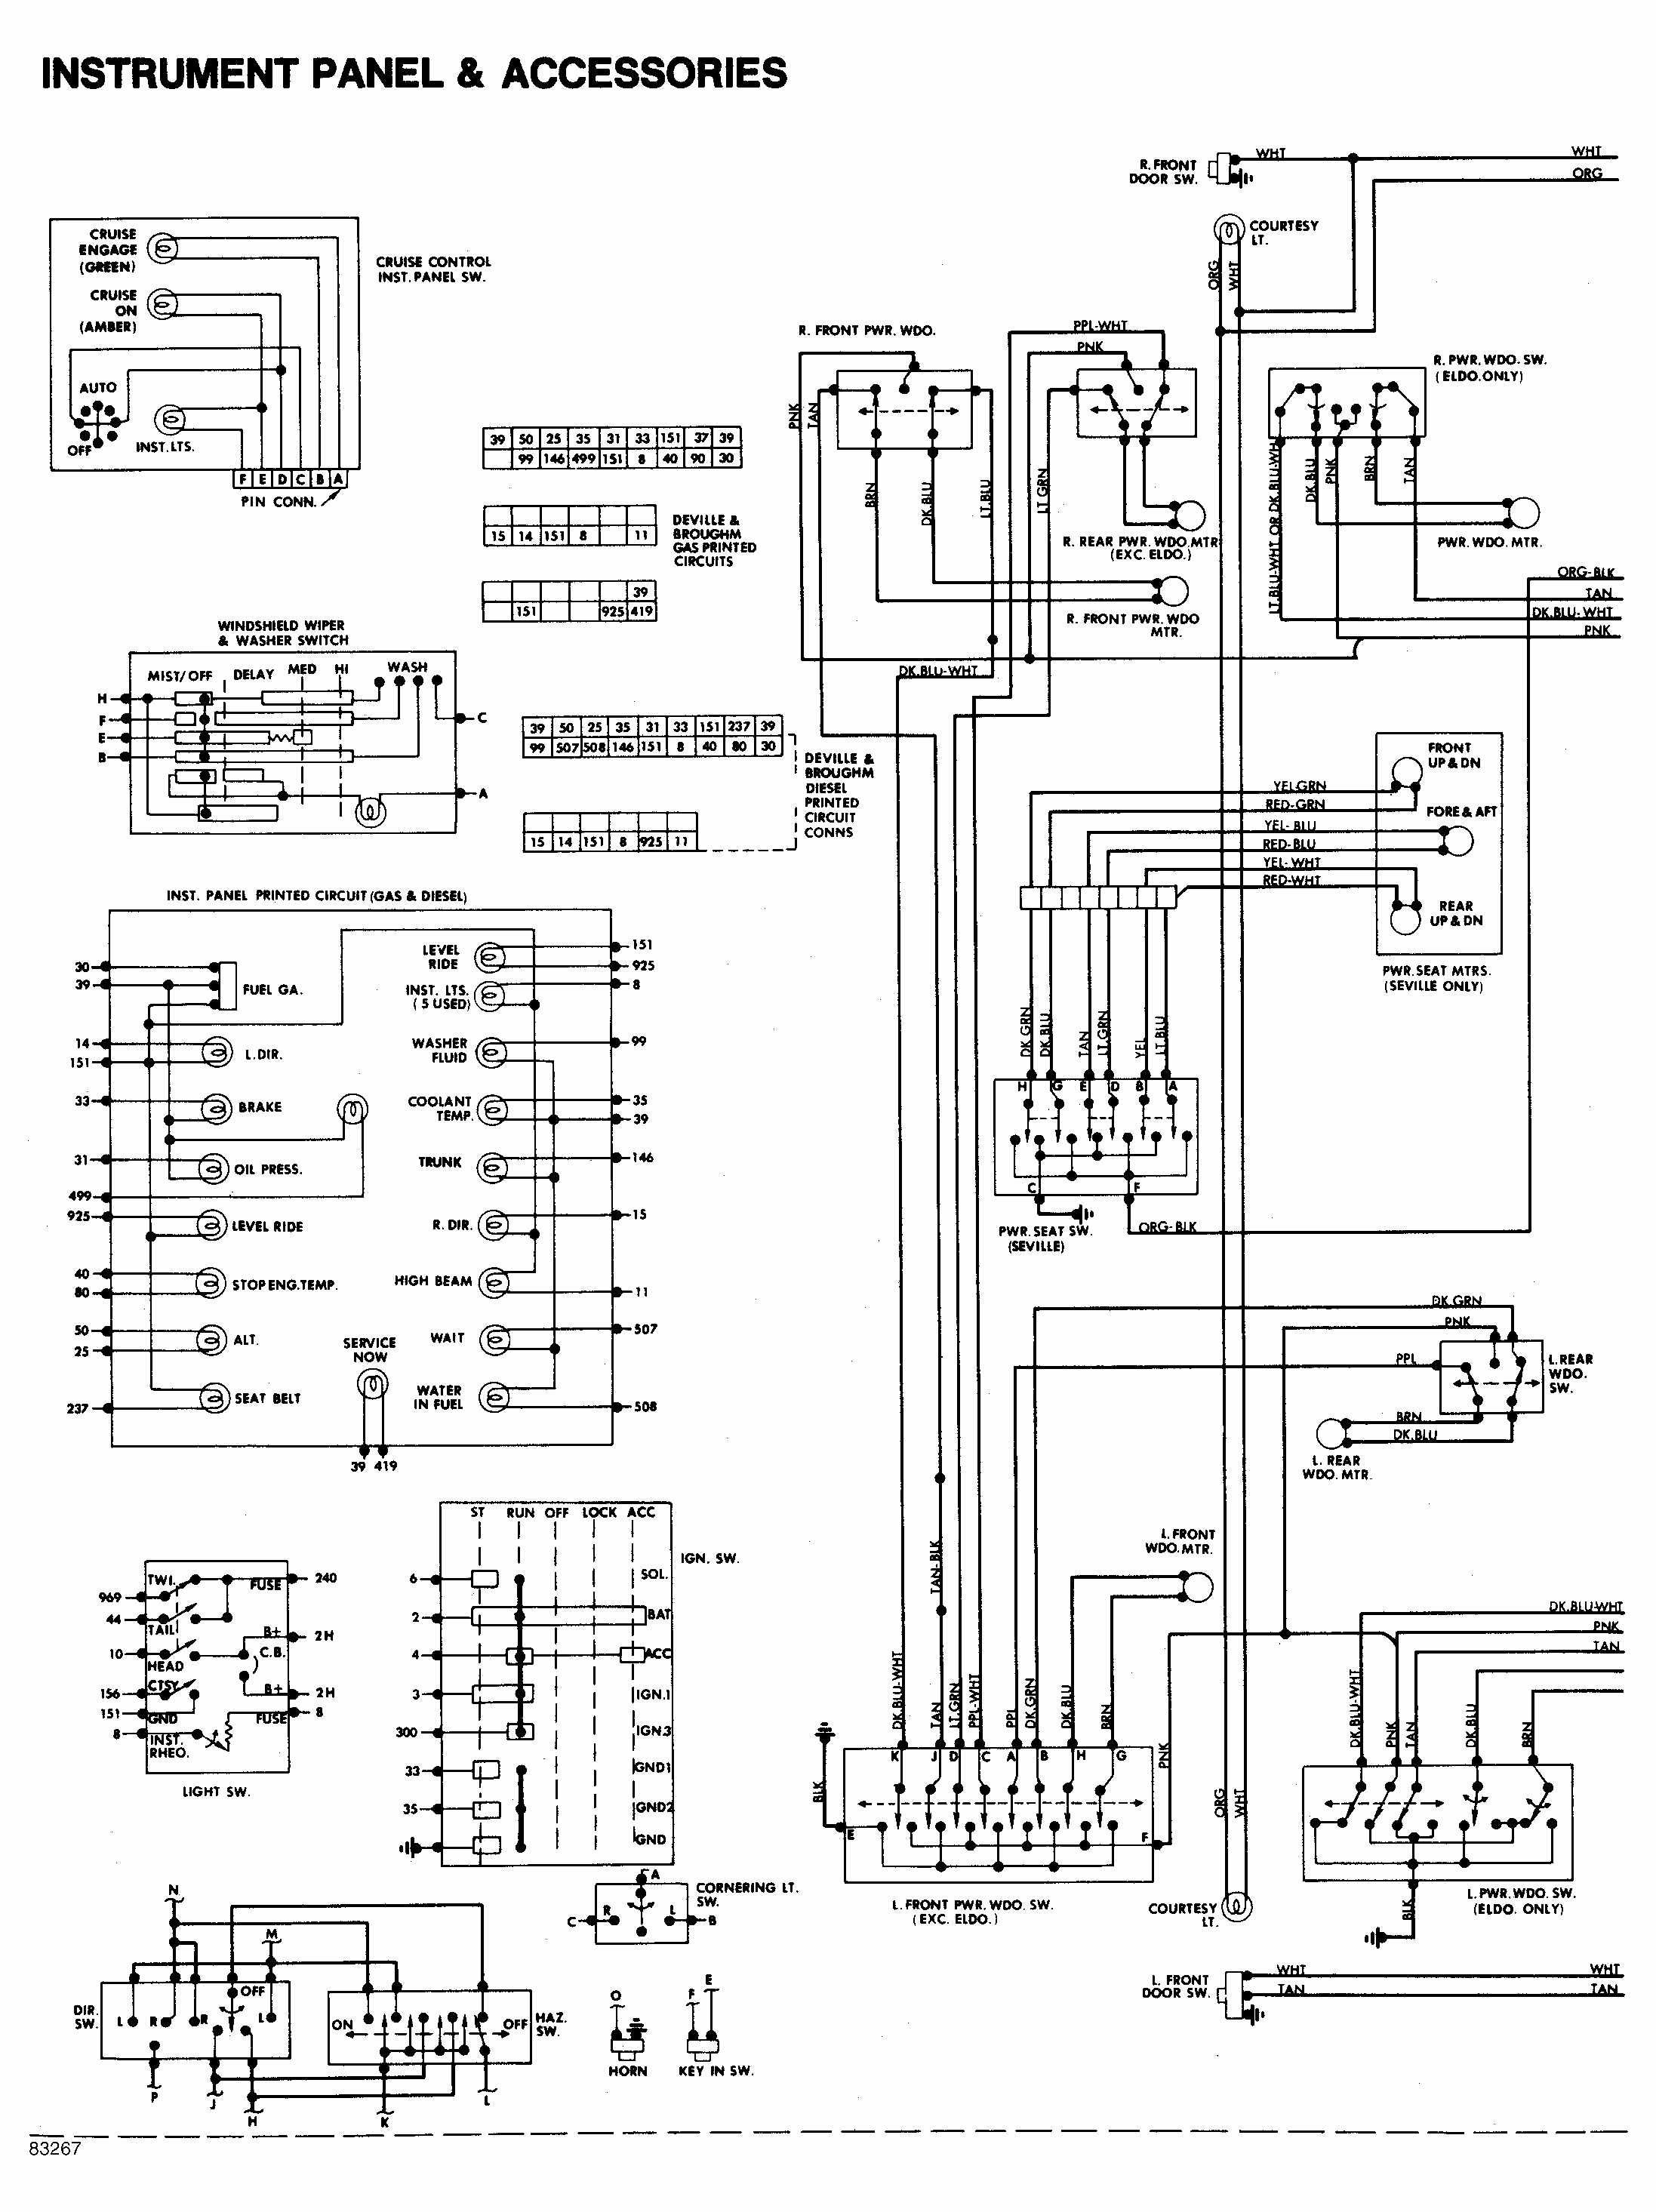 2001 cadillac deville alarm wiring diagram wire center u2022 rh inkshirts co 1965 Cadillac Wiring 1962